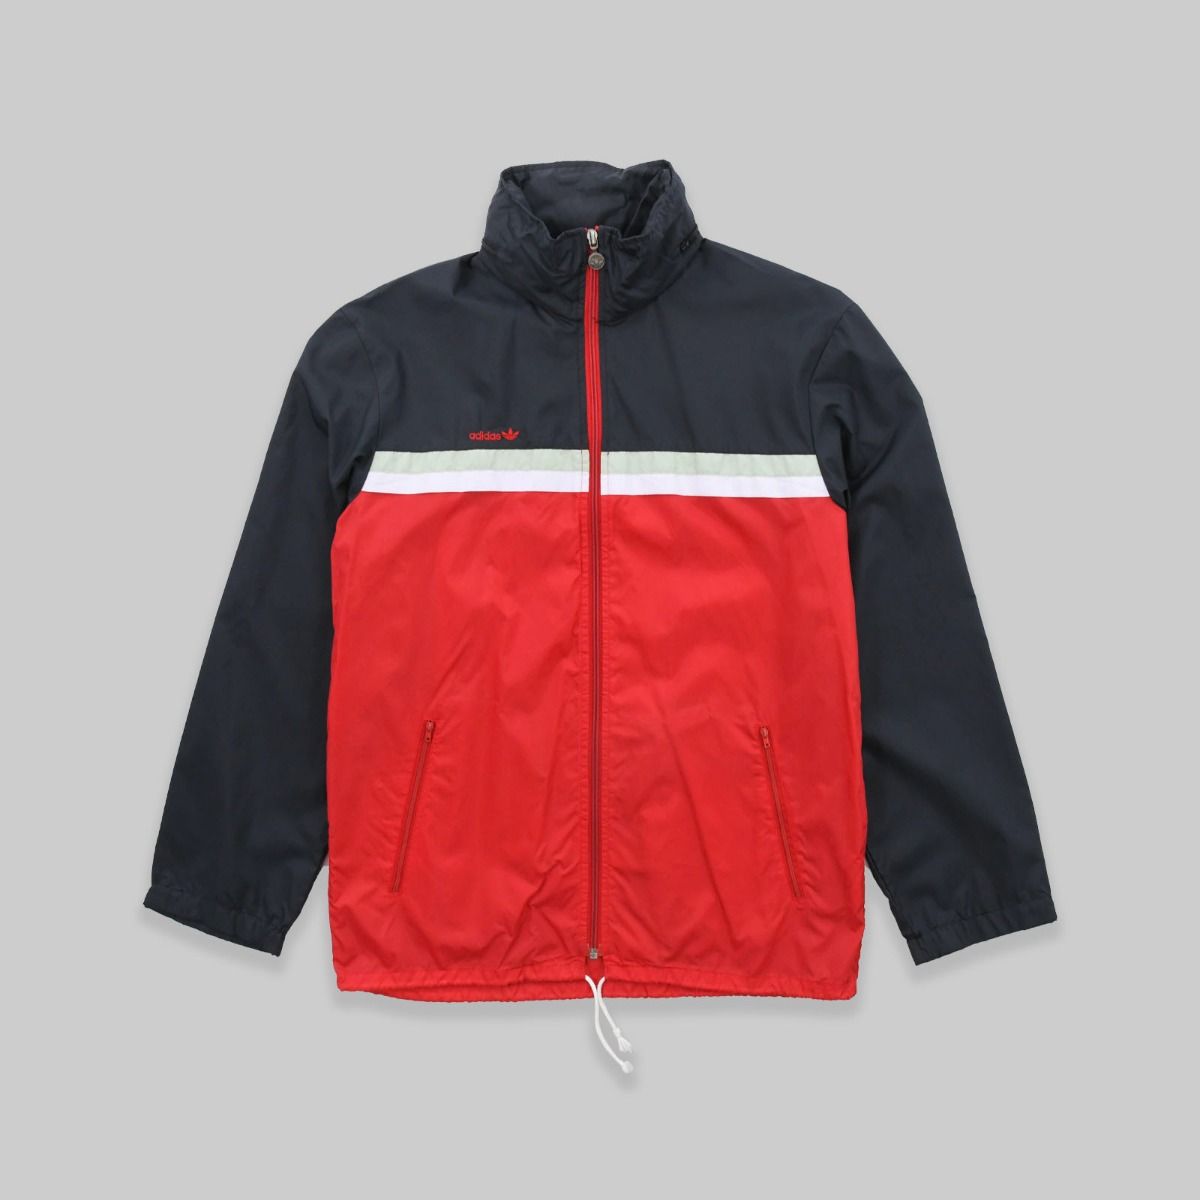 Adidas 1980s Track Jacket